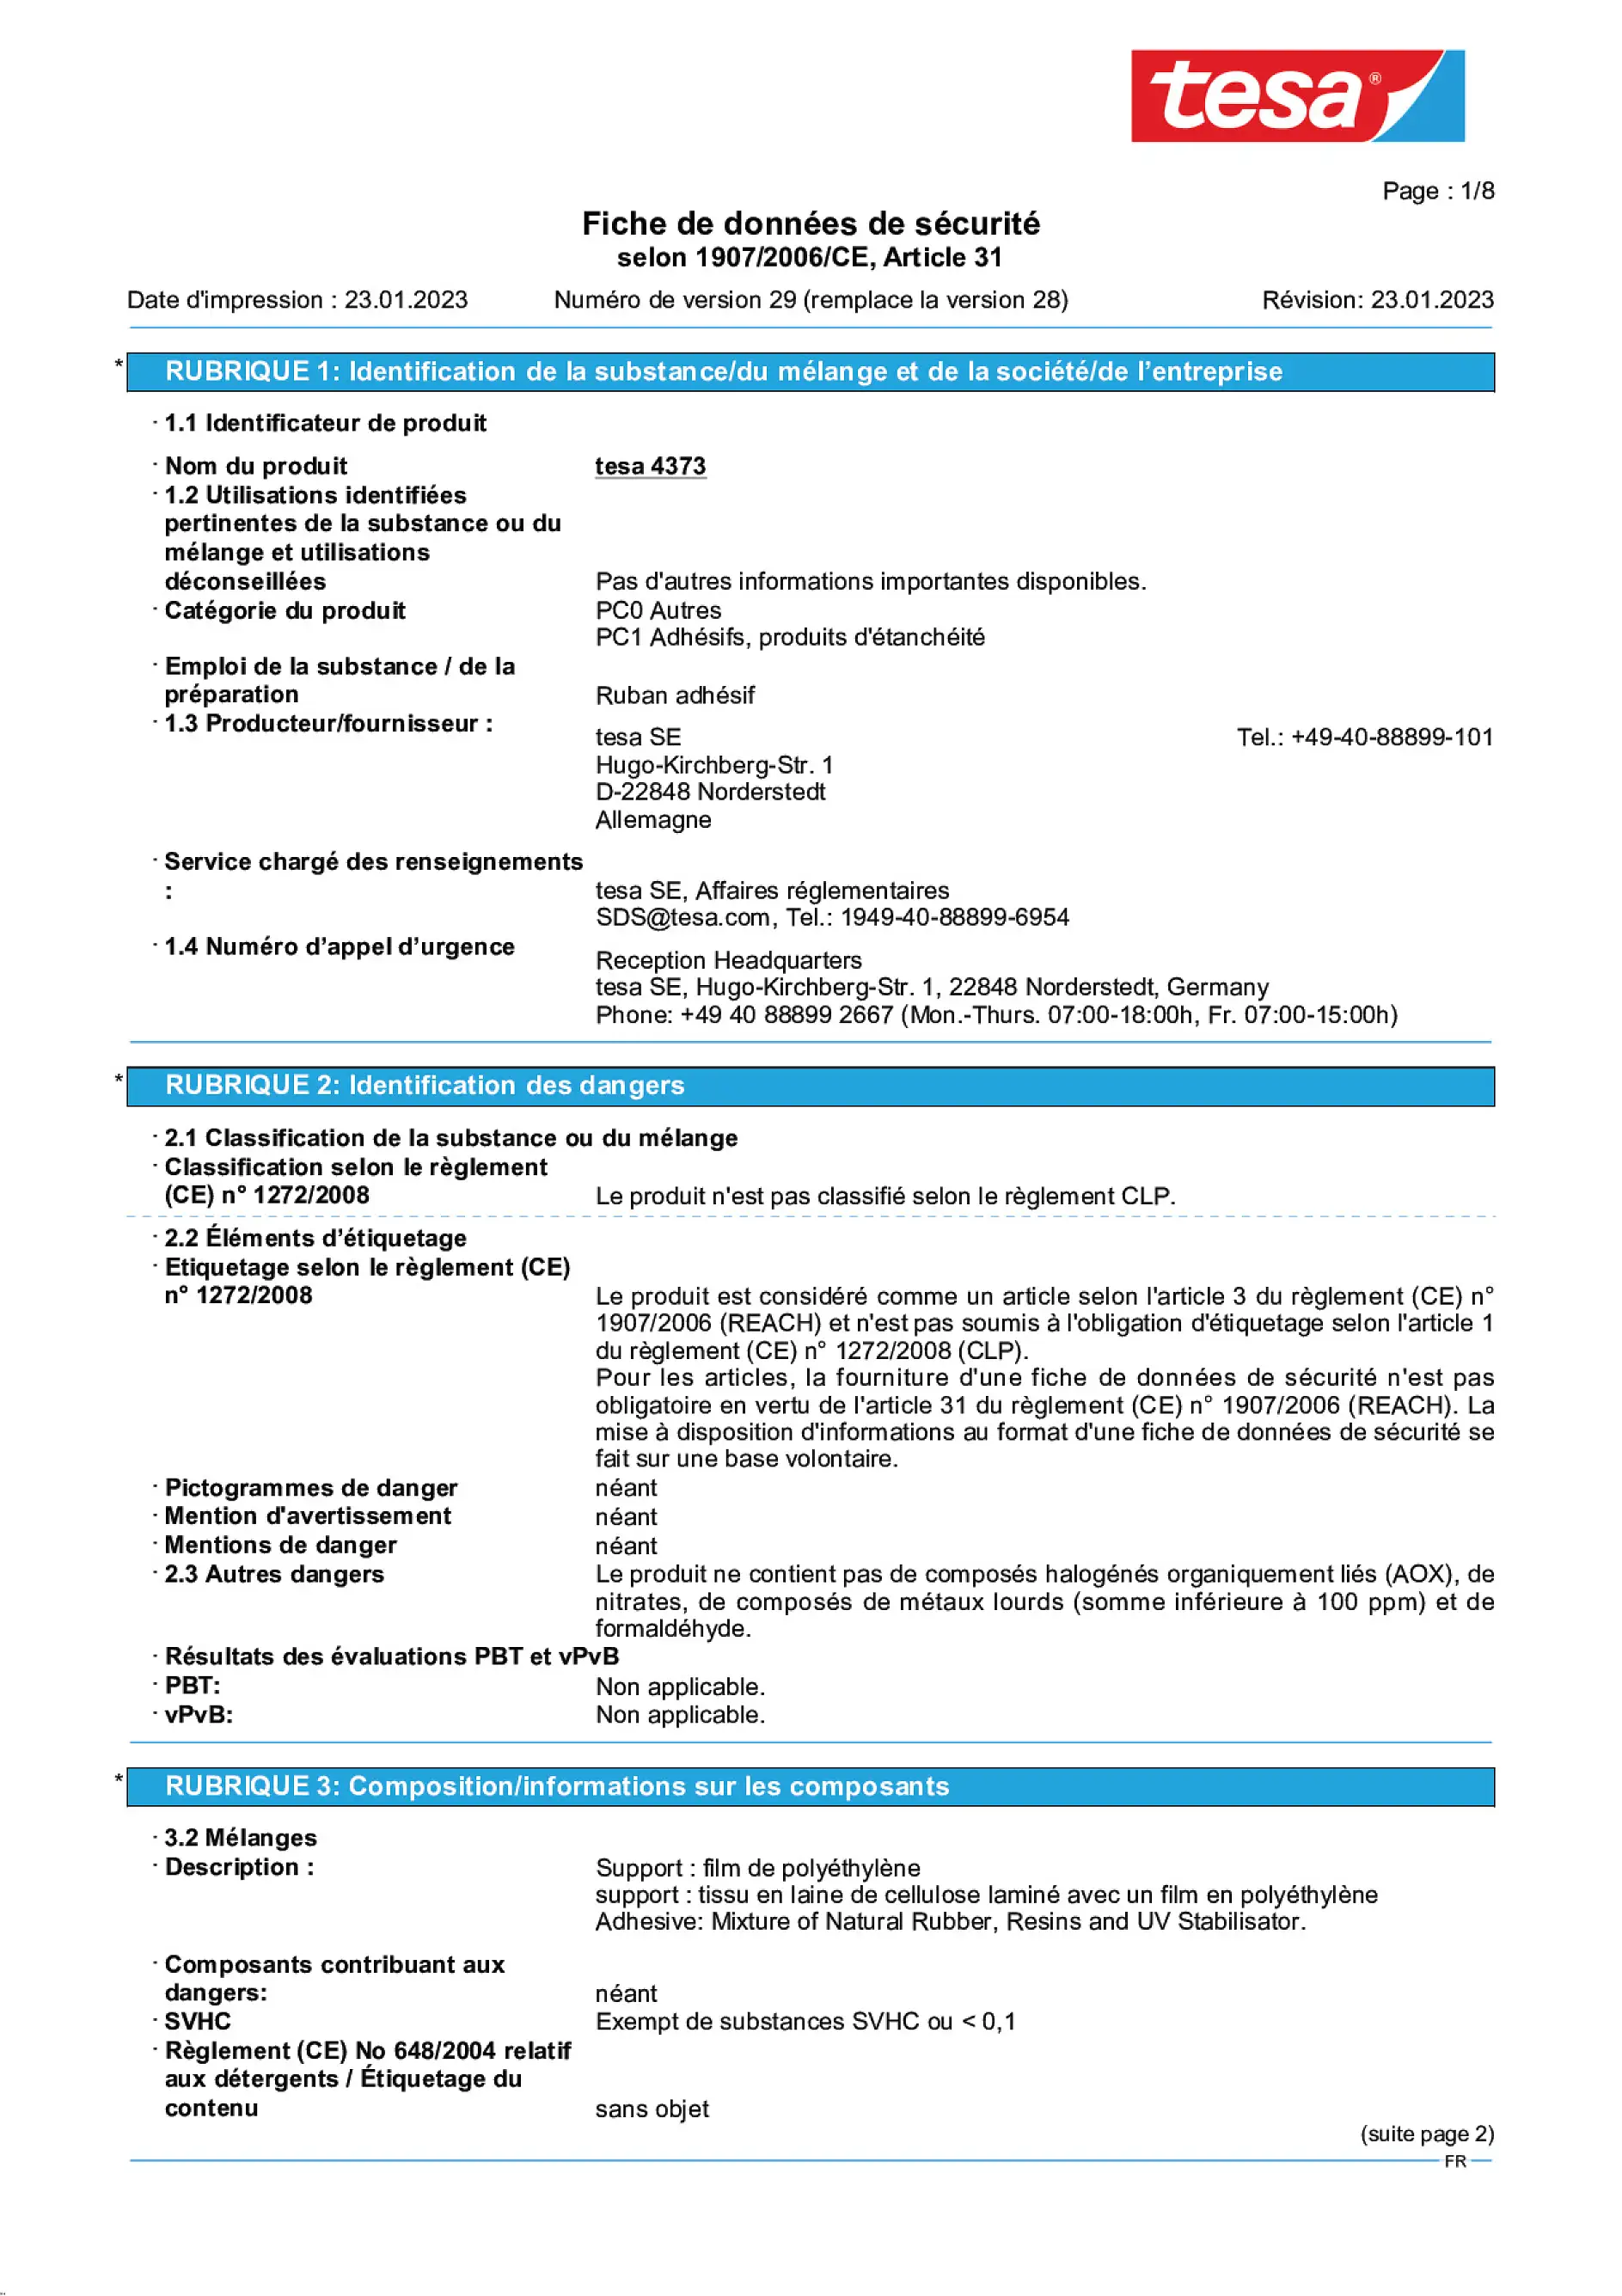 Safety data sheet_tesa® Professional 04373_fr-FR_v29